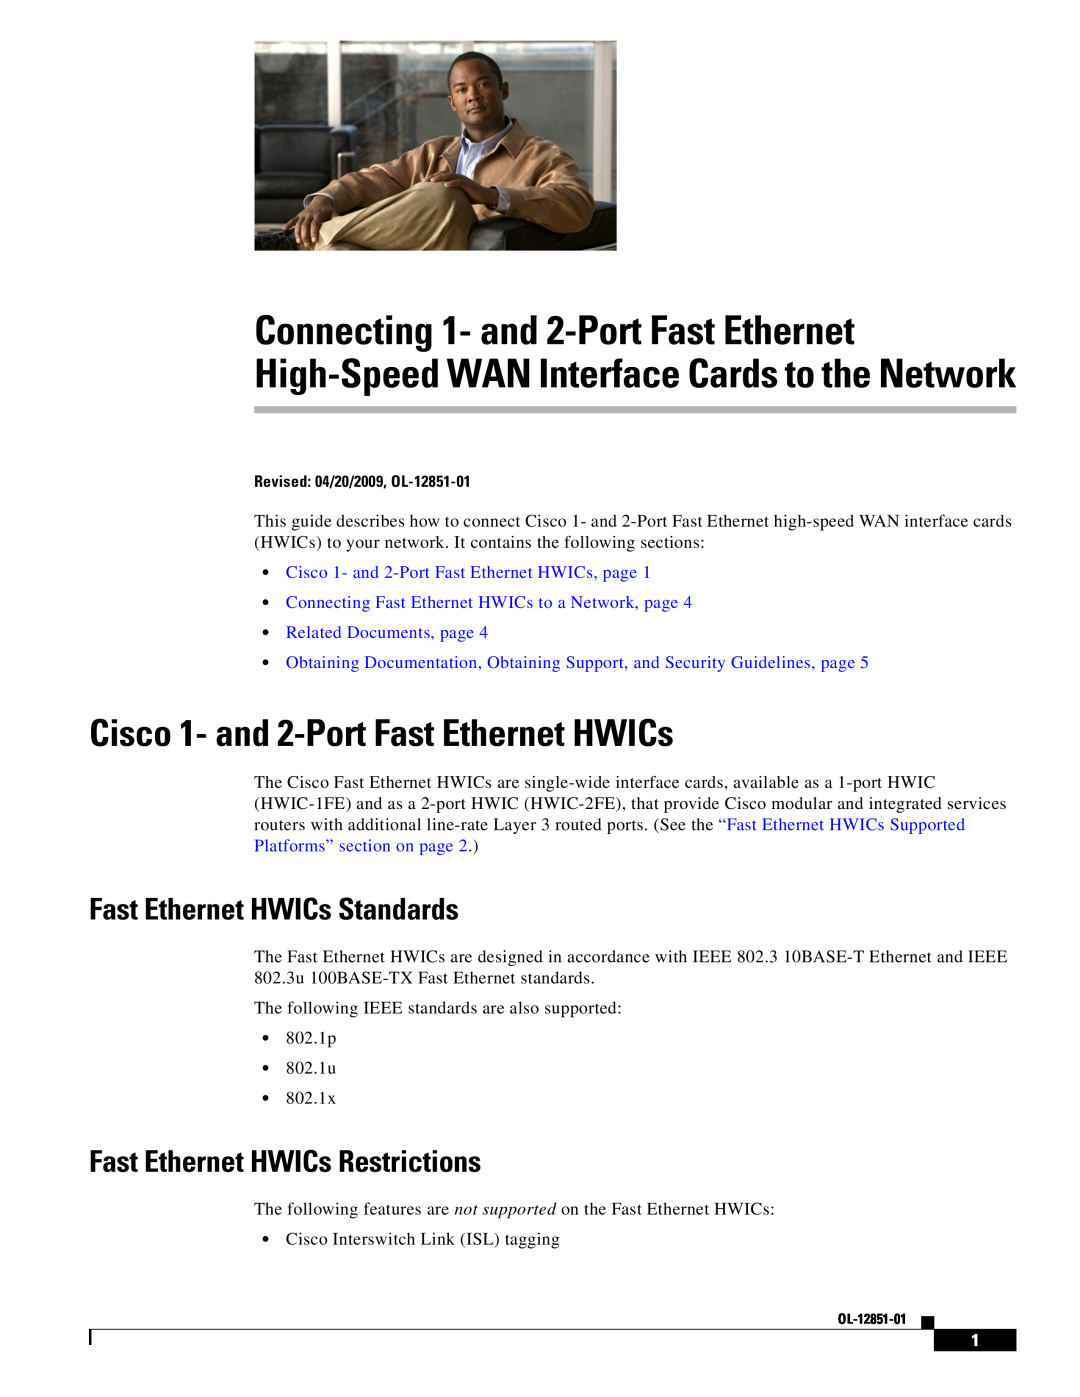 Cisco Systems HWIC-1FE, HWIC1FERF manual Cisco 1- and 2-Port Fast Ethernet HWICs, Fast Ethernet HWICs Standards 